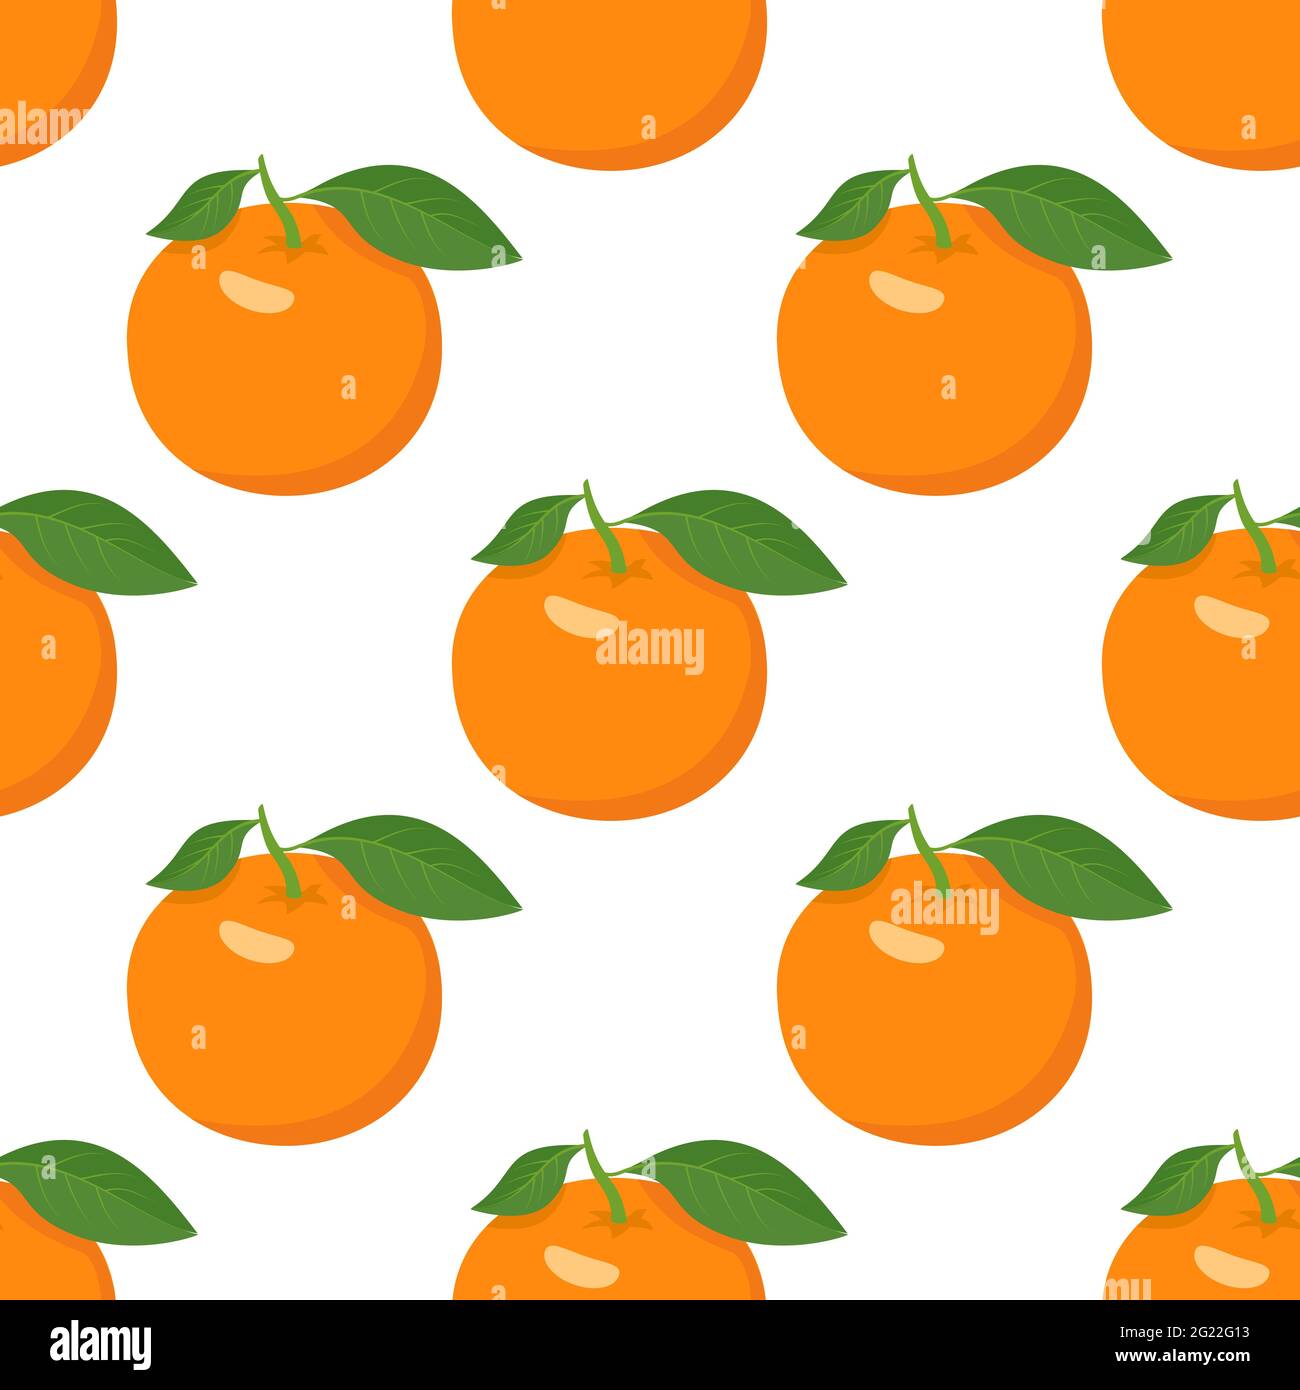 Fruit Clipart-bright fresh citrus fruit orange clip art